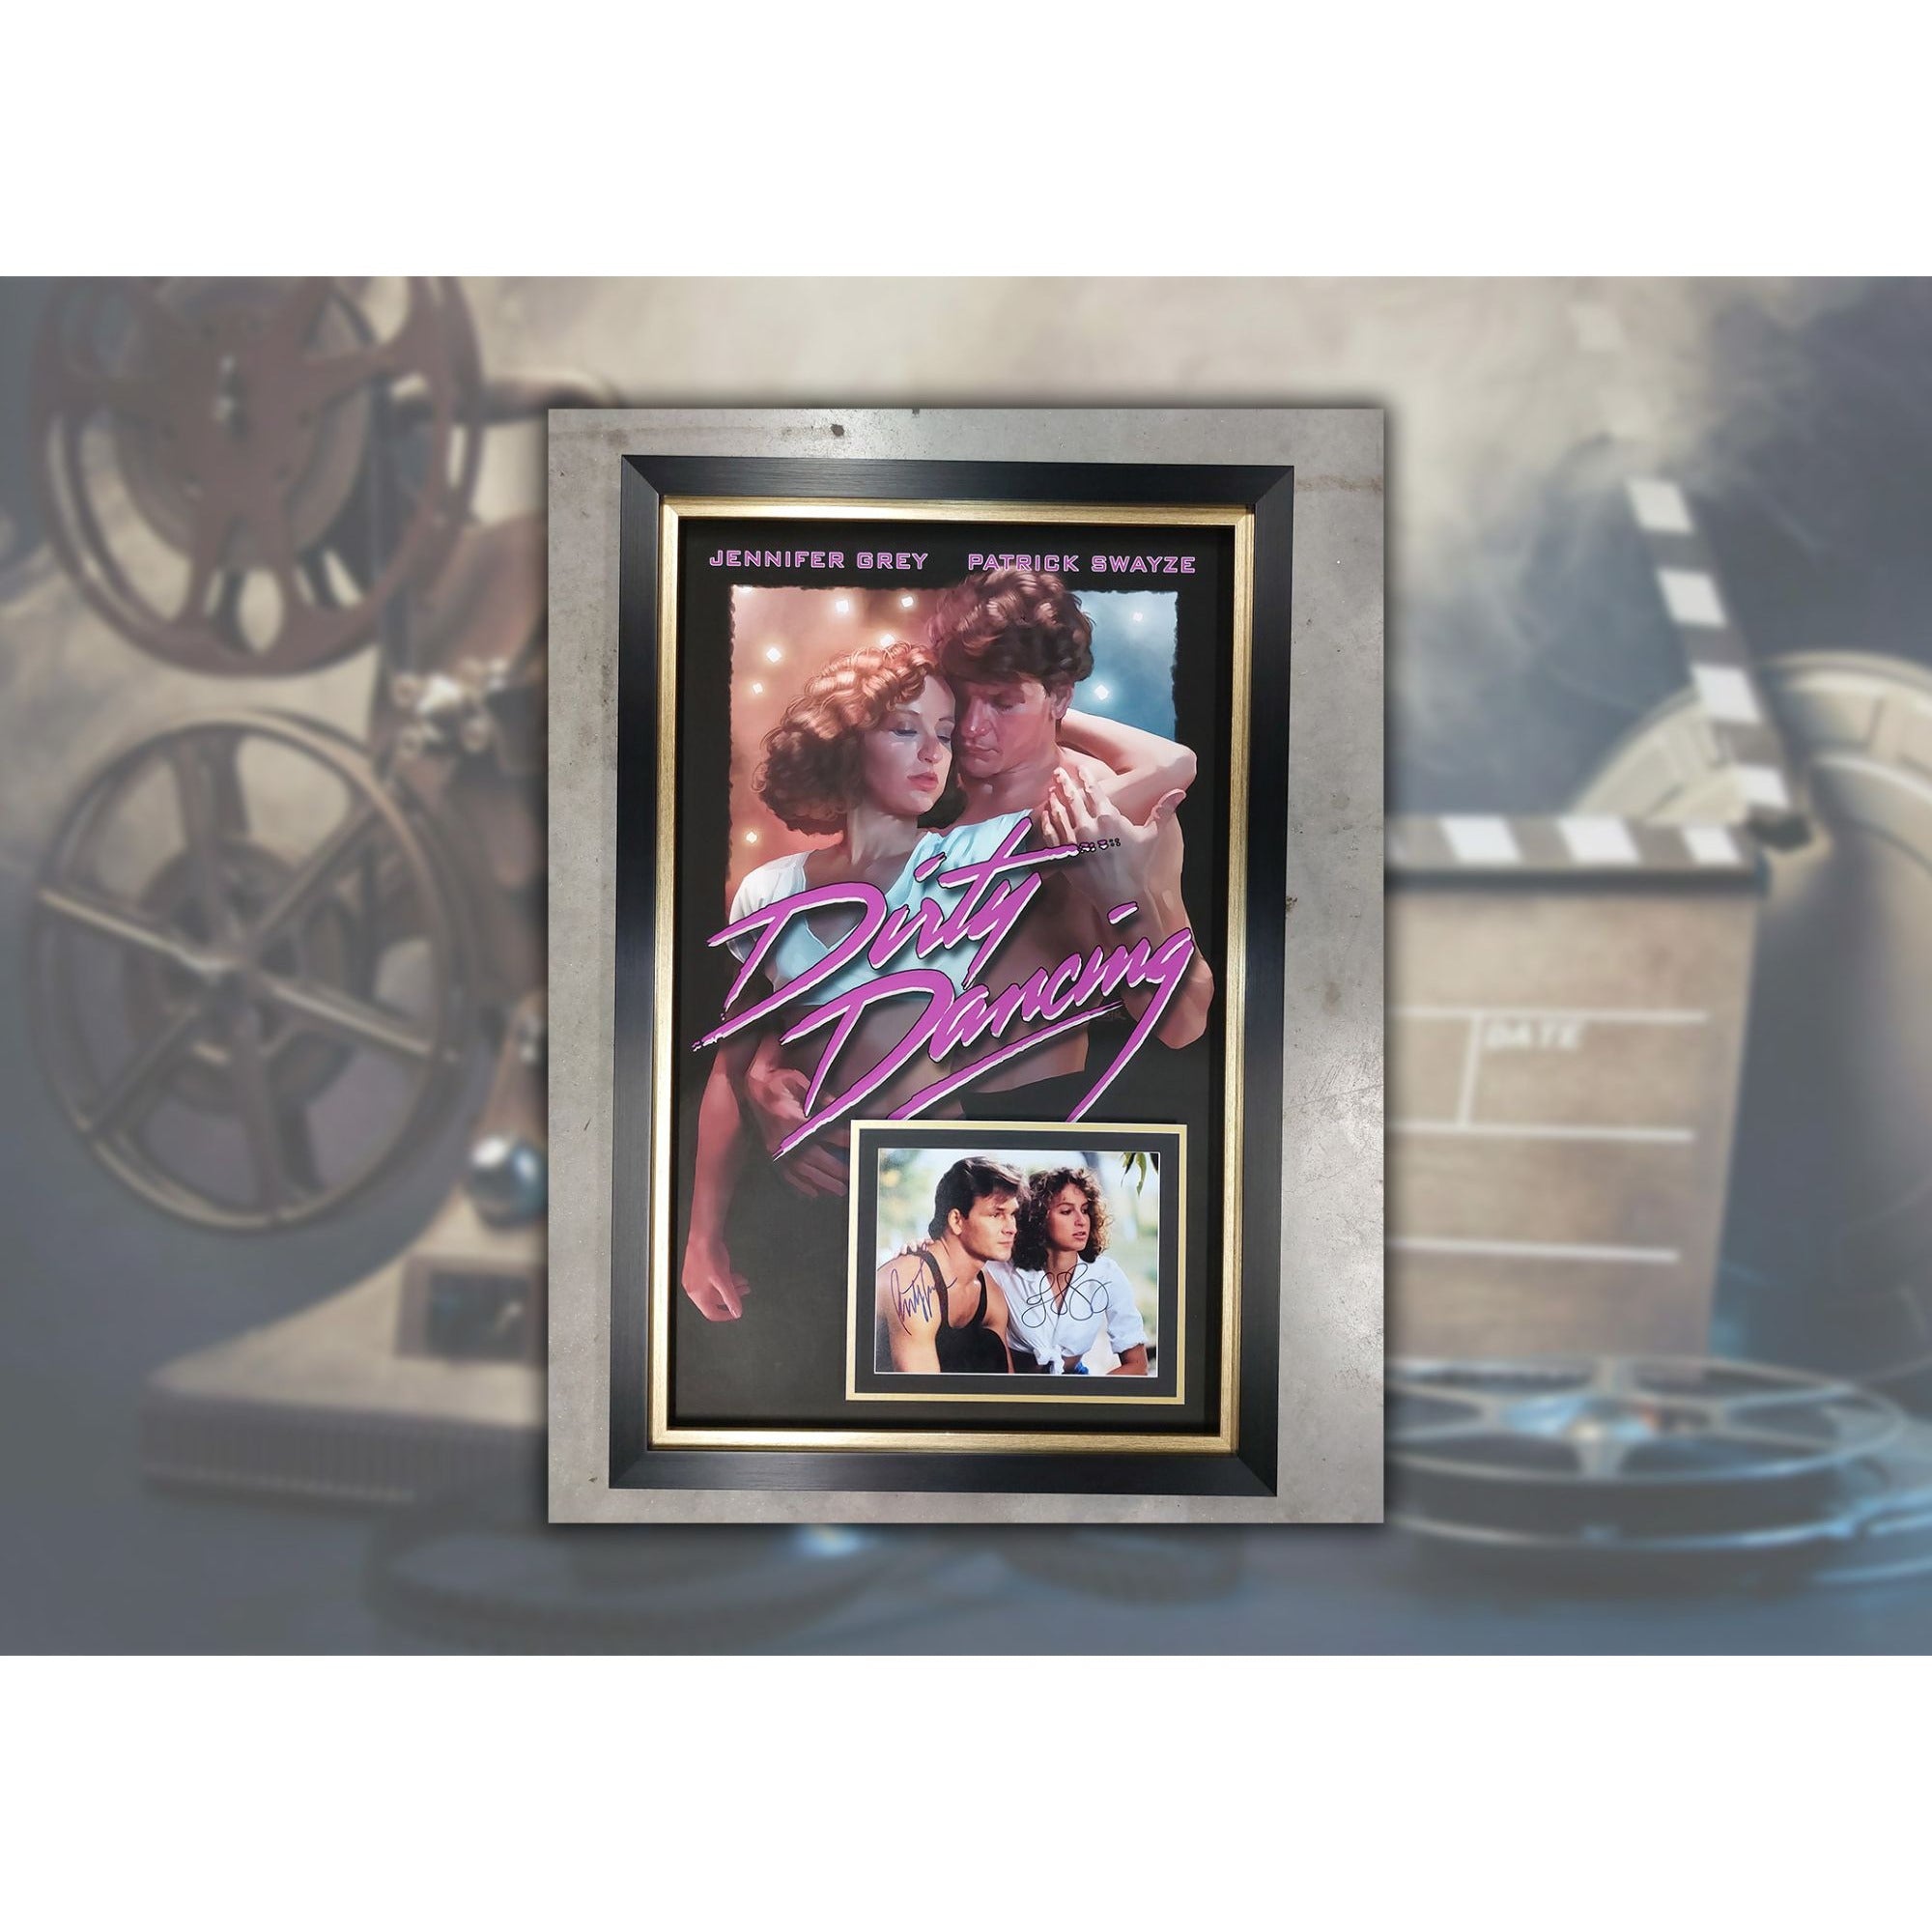 Dirty Dancing Patrick Swayze and Jennifer Gray 8x10 photo signed